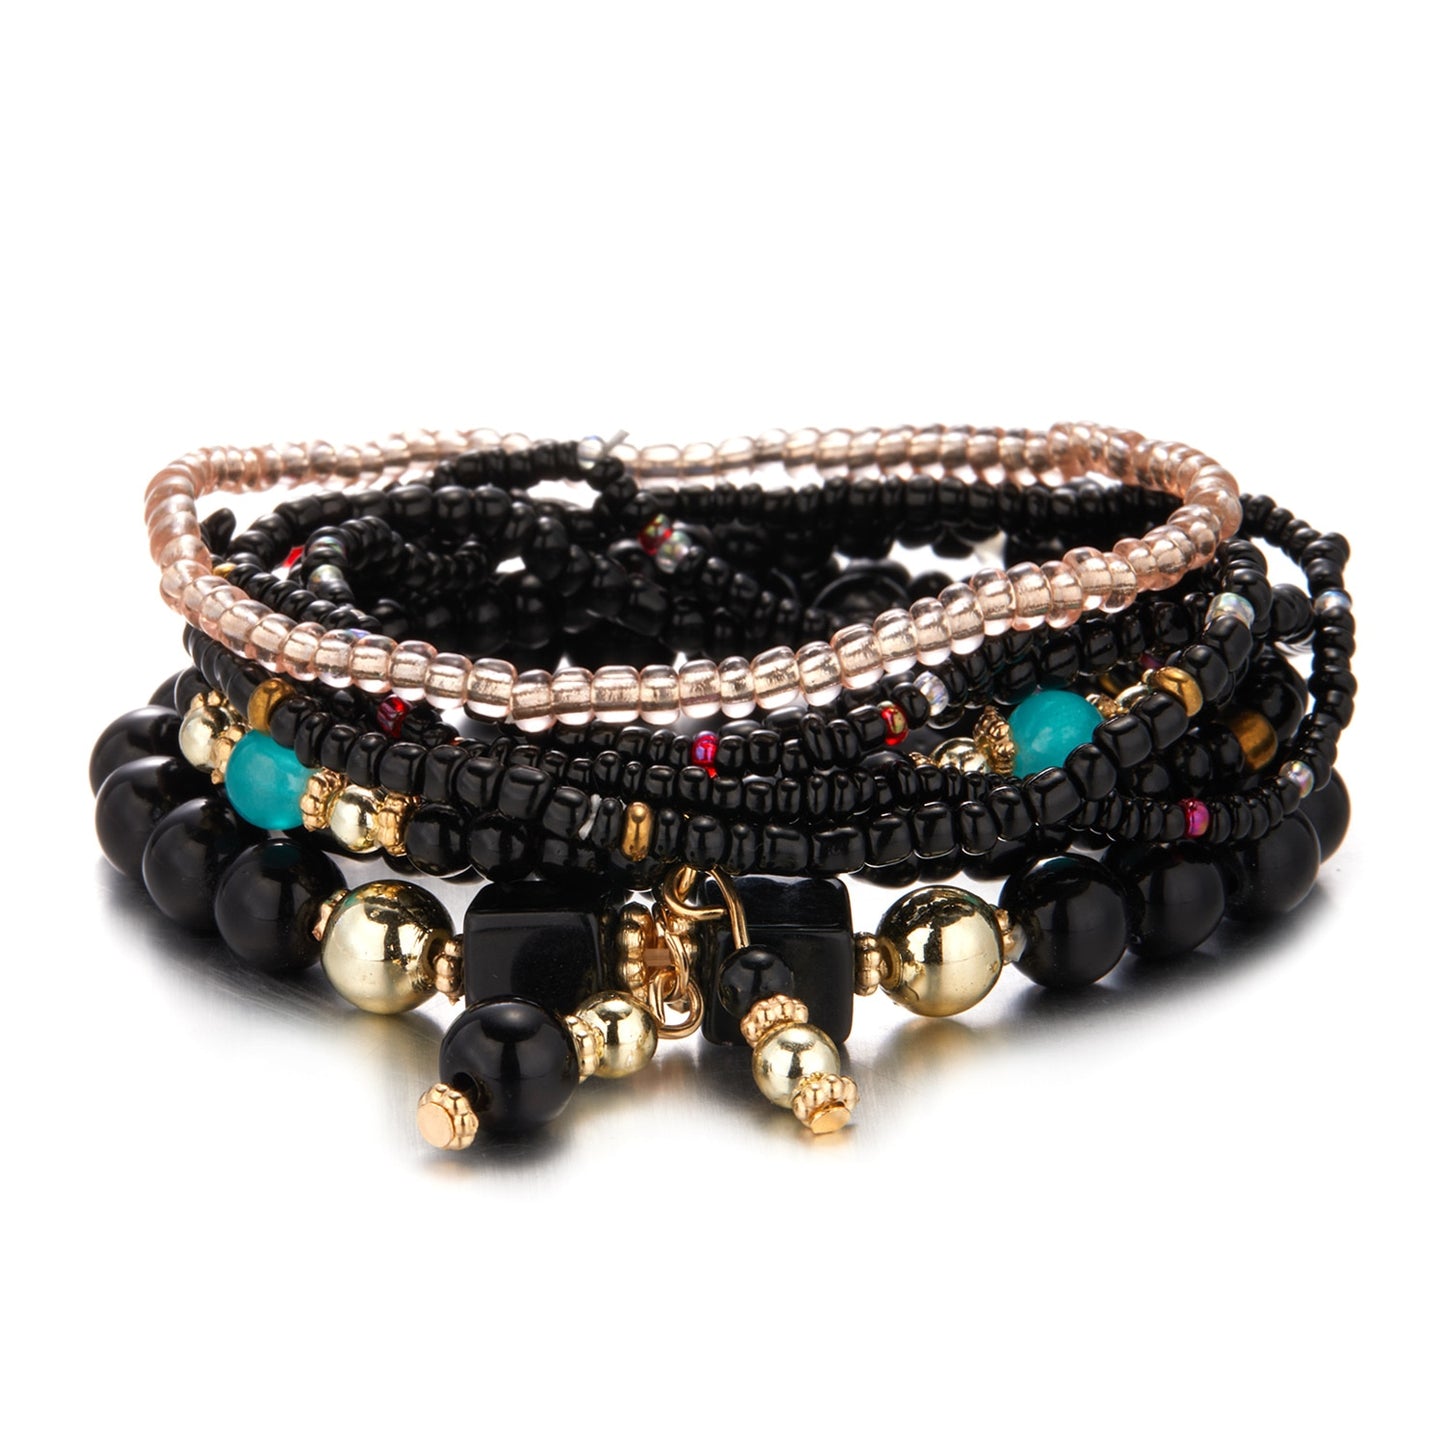 Bohemia Multilayer Elastic Weave Bracelets Set For Women Heart Butterfly Evil Eye Beads Combination Bracelet Charm Jewelry Gifts